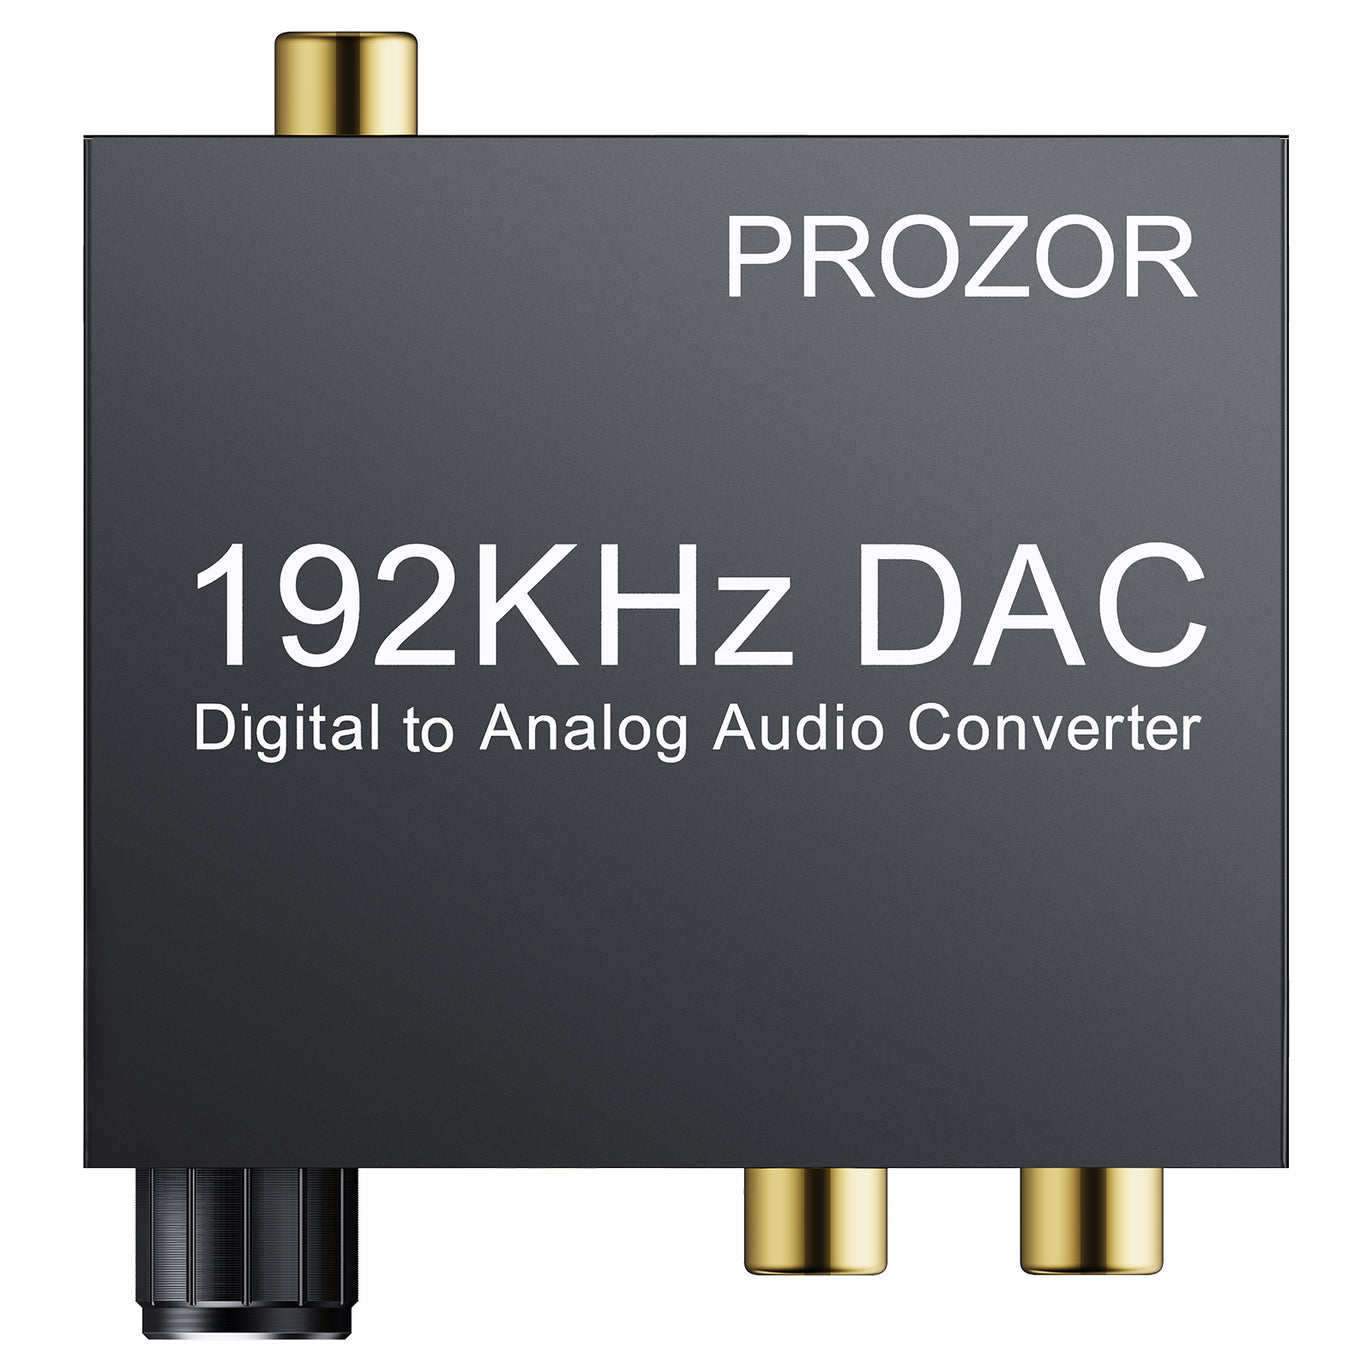 PROZOR 192kHz Digital to Analog Converter Volume Adjustable – prozor store